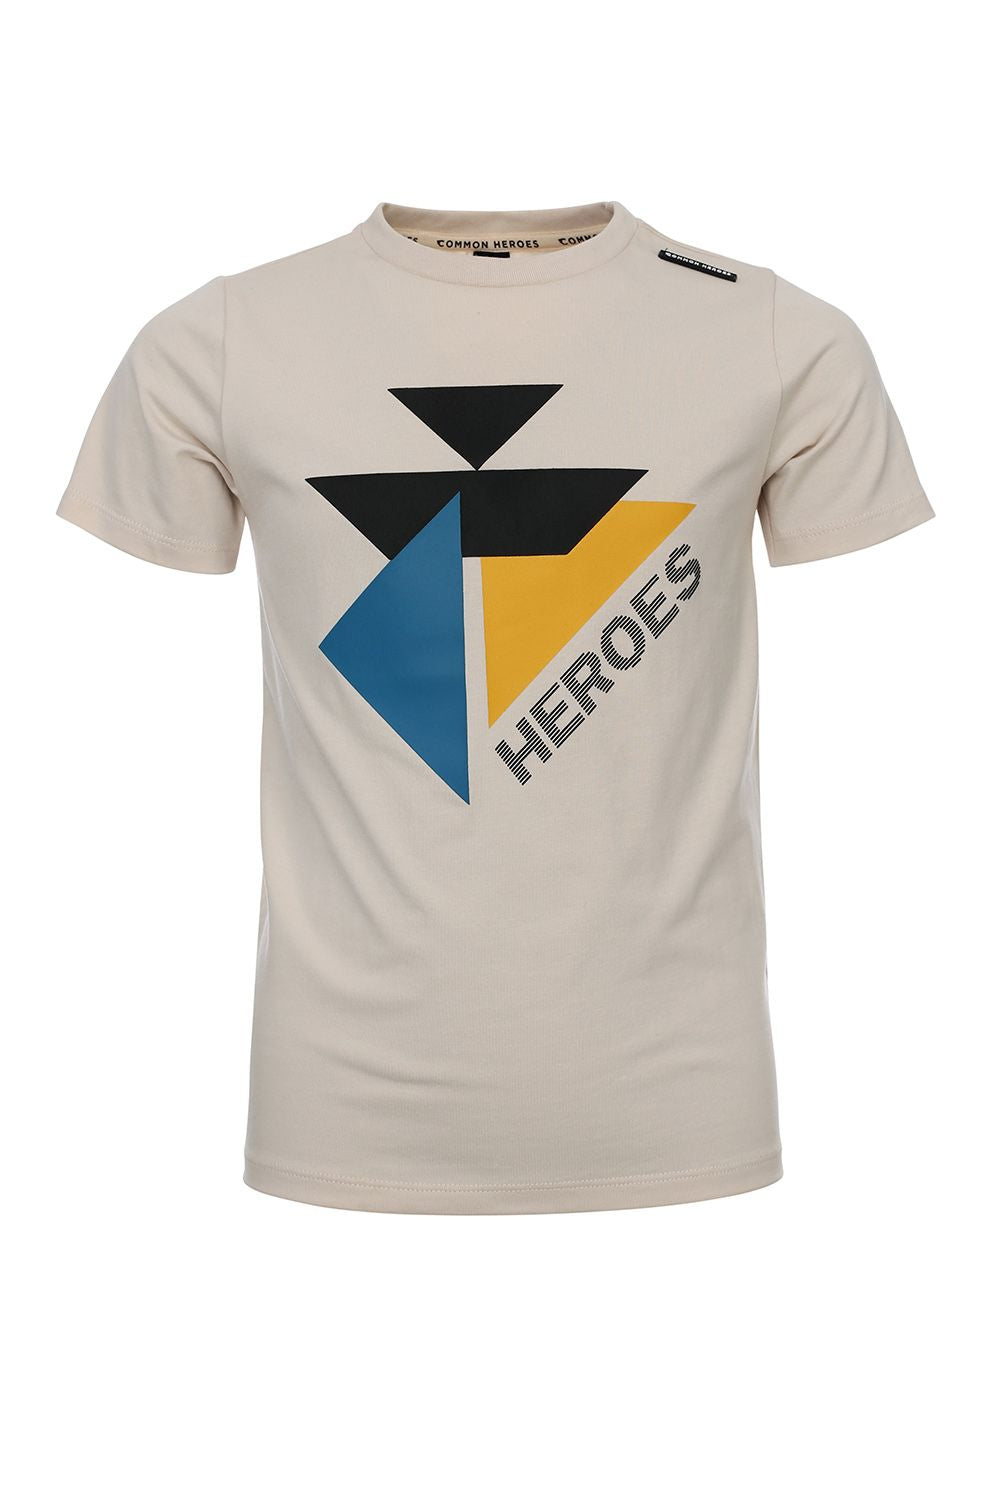 Common Heroes 2331-8421-040 T-Shirt 2331-8421-040 40 Bone